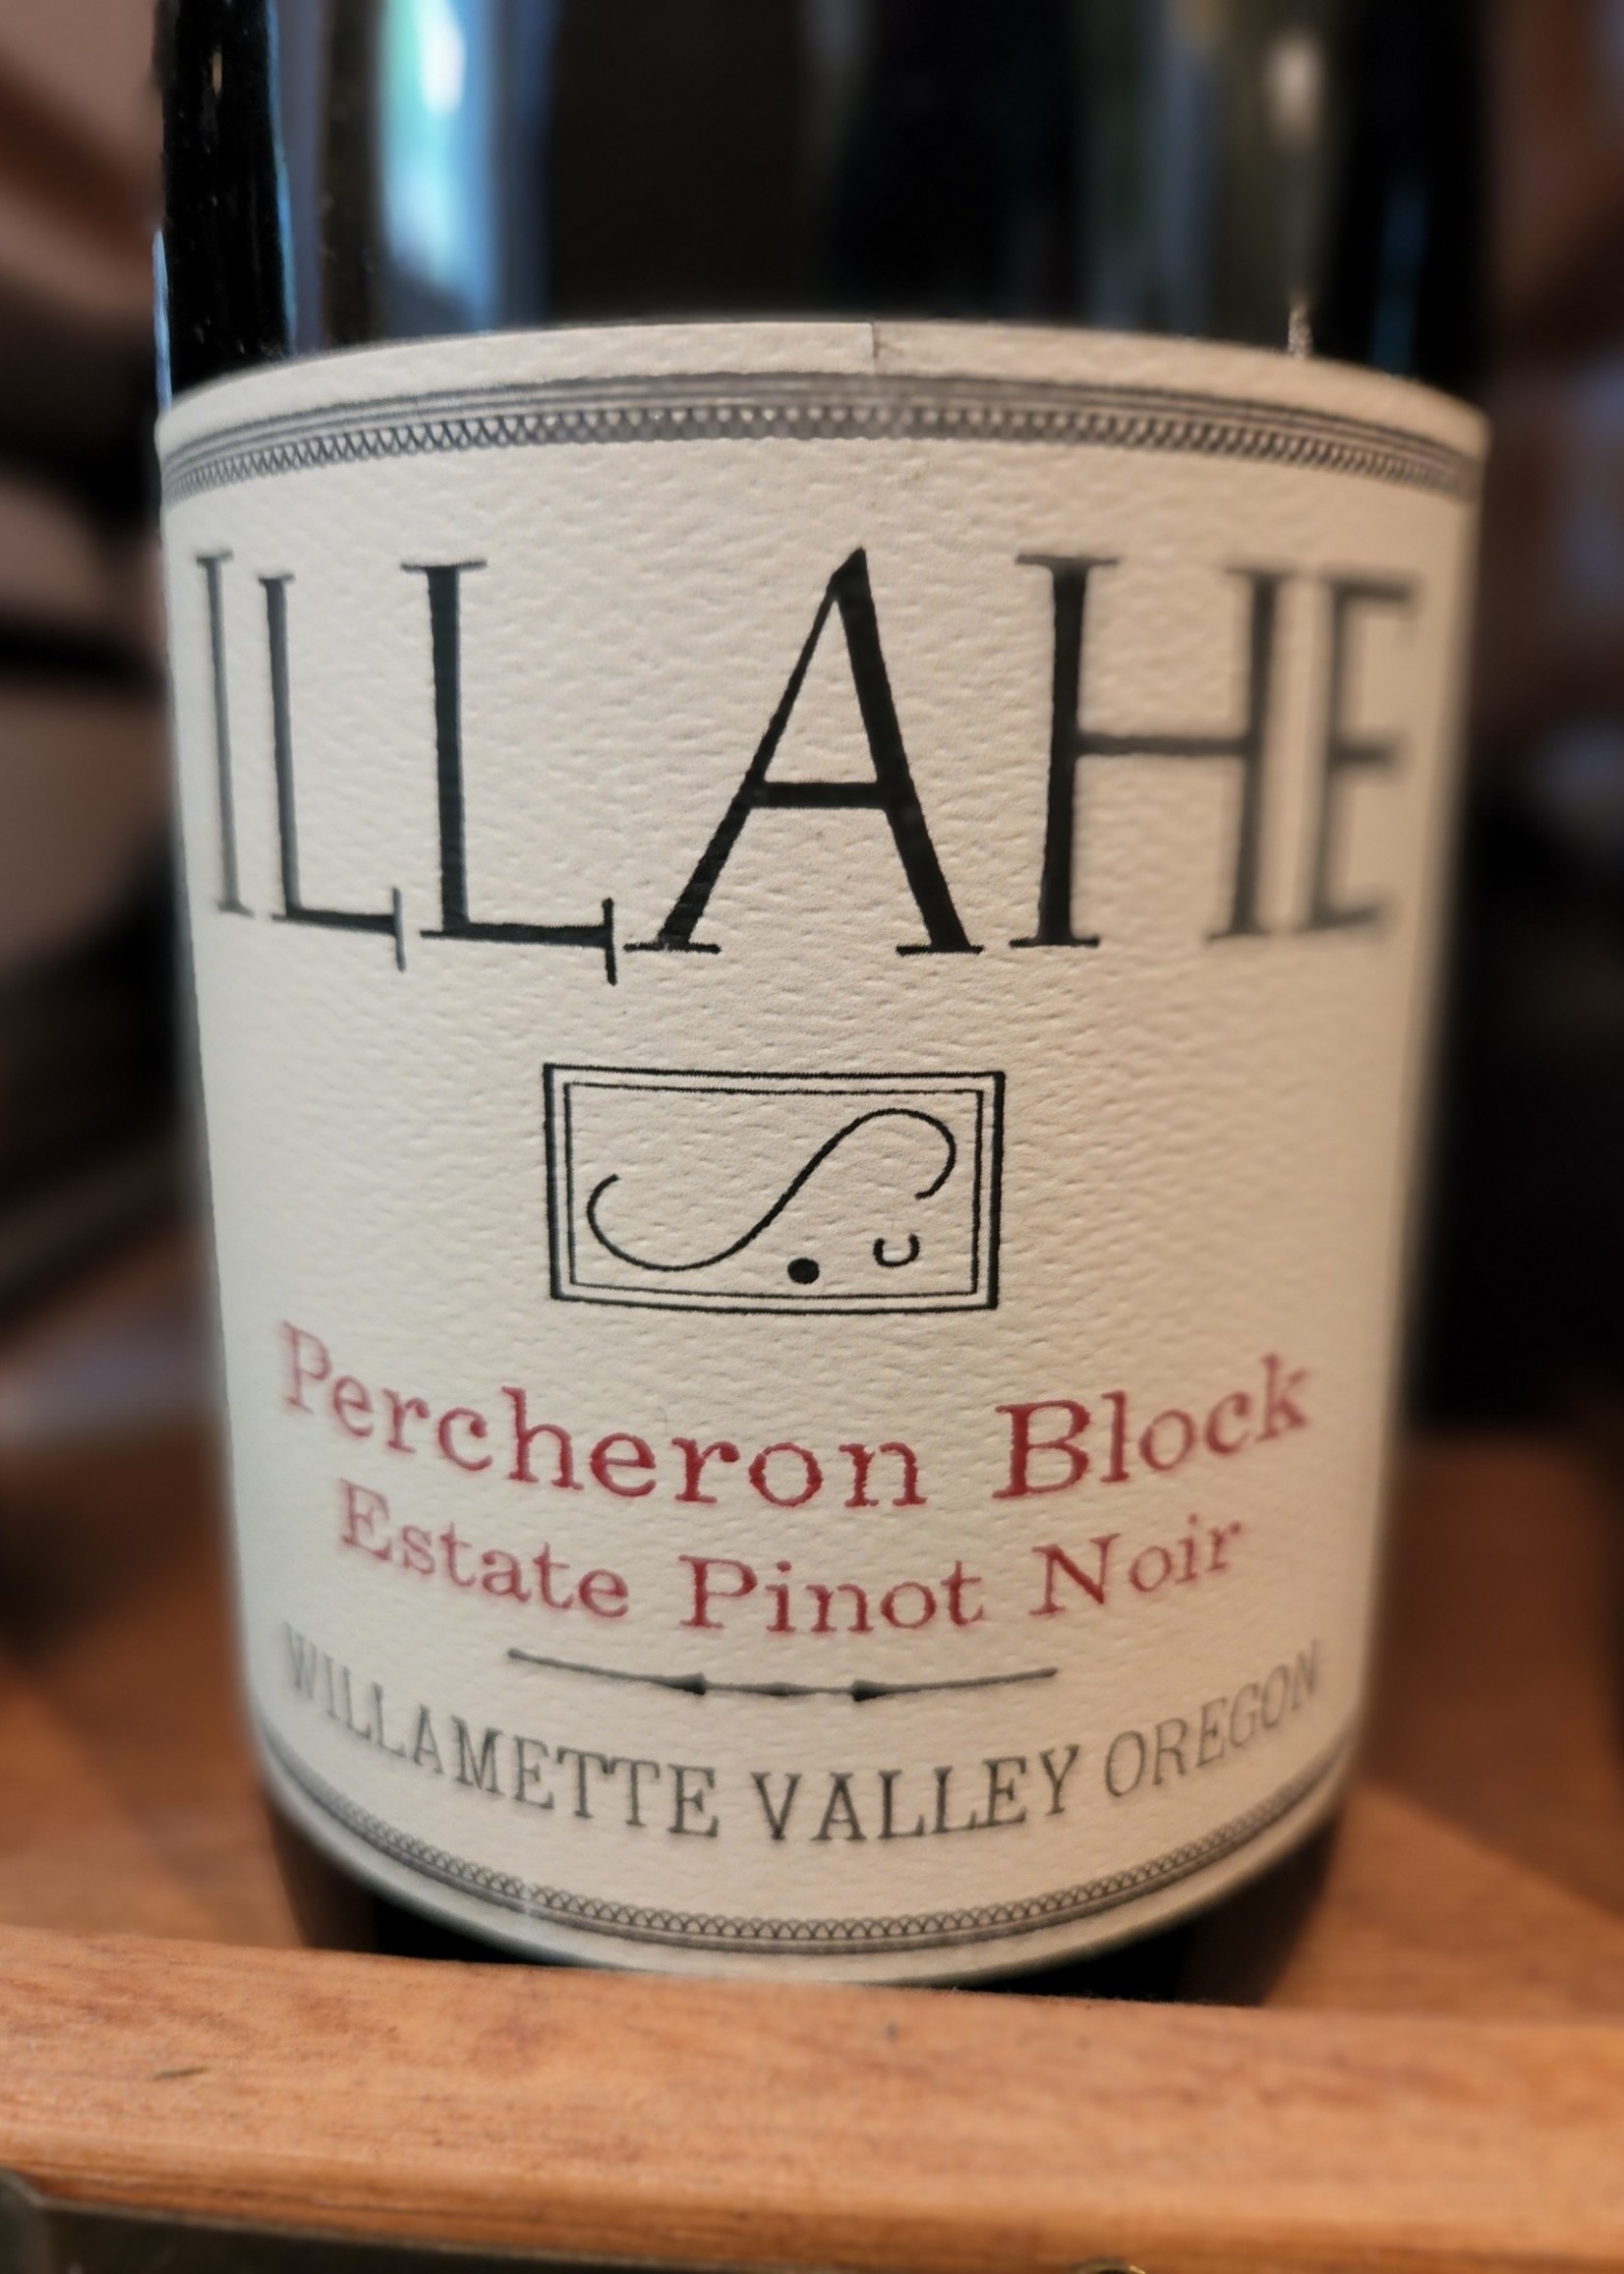 Illahe "Percheron" Willamette Valley Pinot Noir 2019